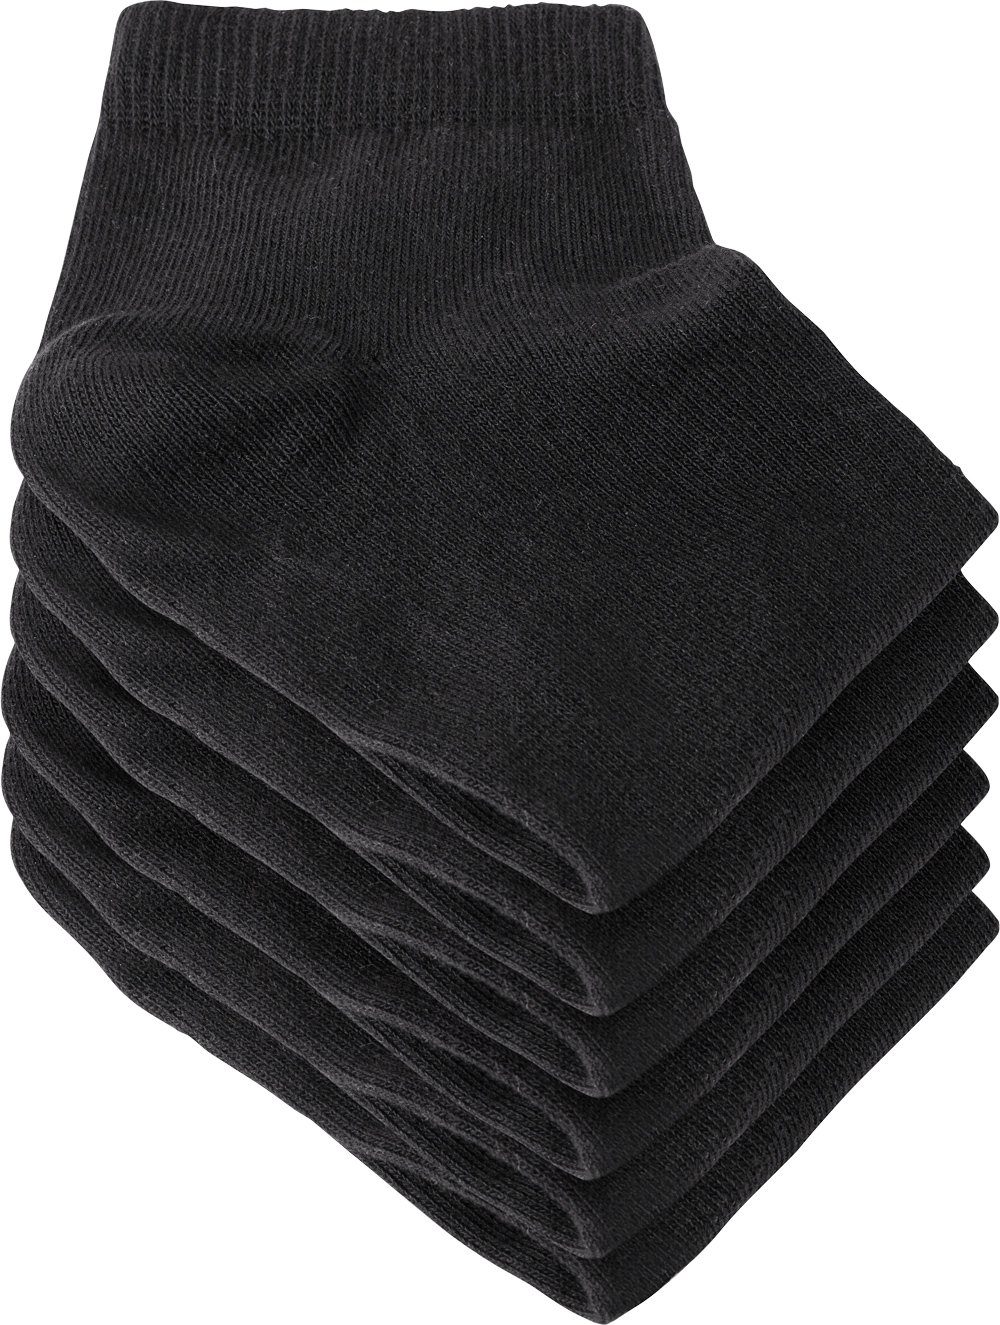 6er-Pack) atmungsaktiv und passt Socken perfekt Fuß Nordcap (Packung, feuchtigkeitsregulierend an, an schwarz sich den